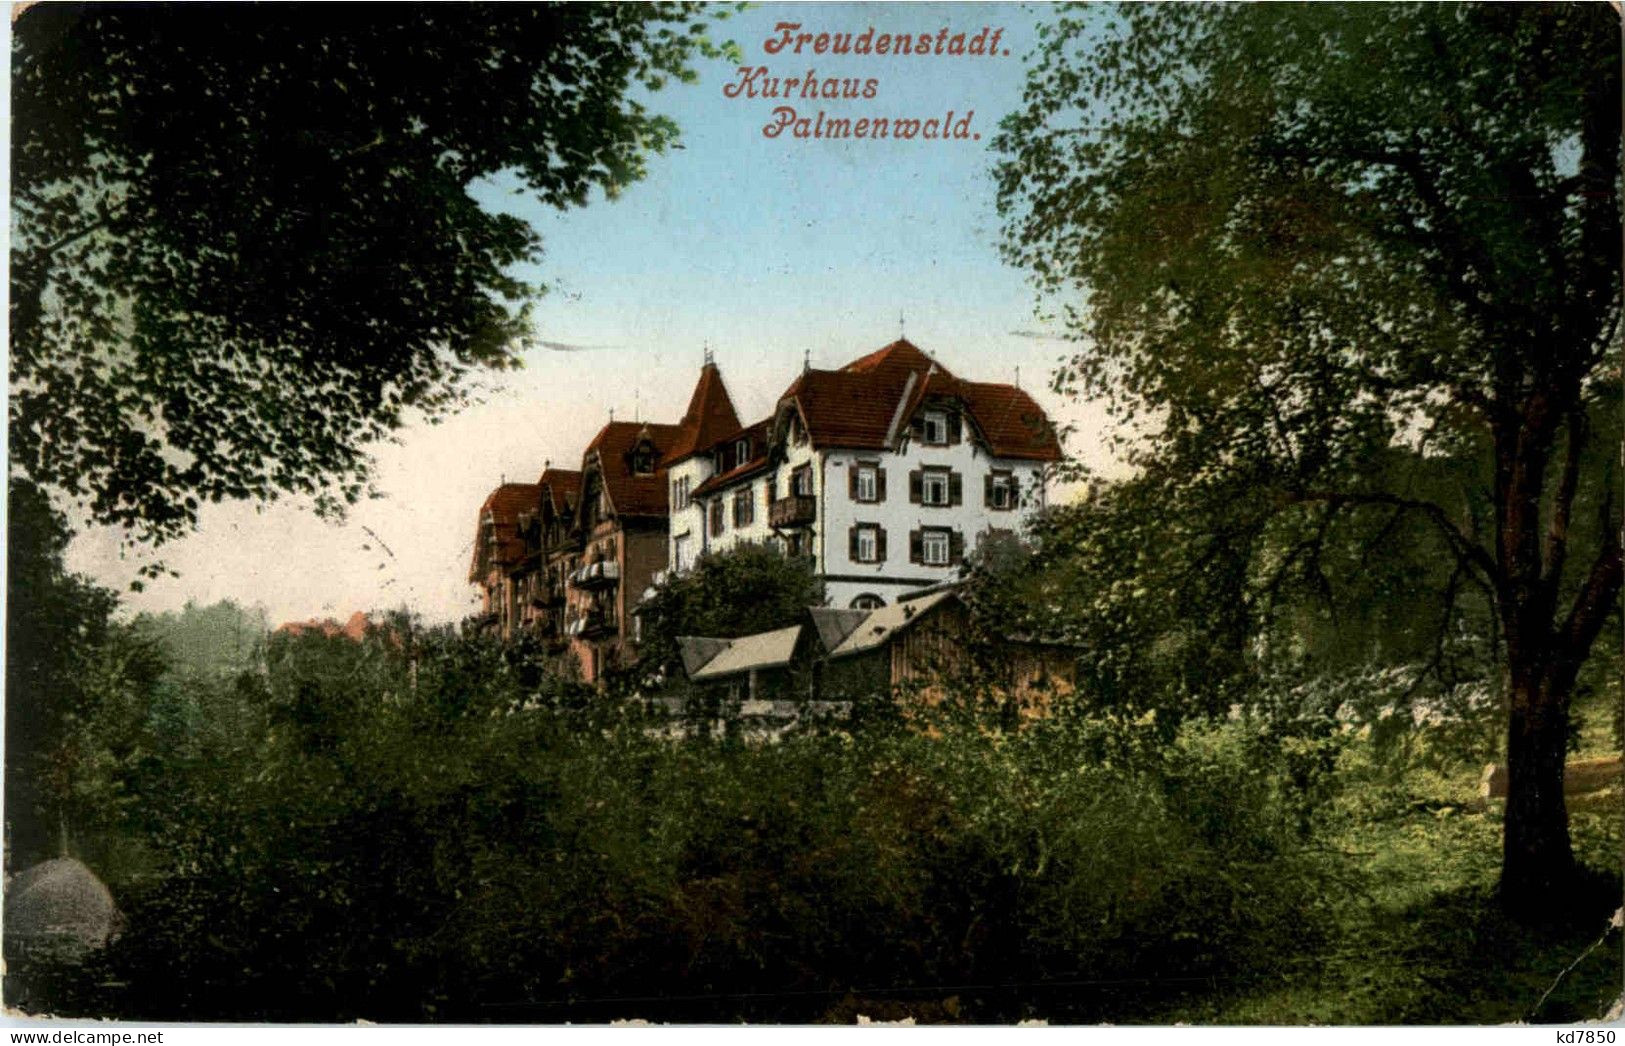 Freudenstadt - Kurhaus Palmenwald - Freudenstadt